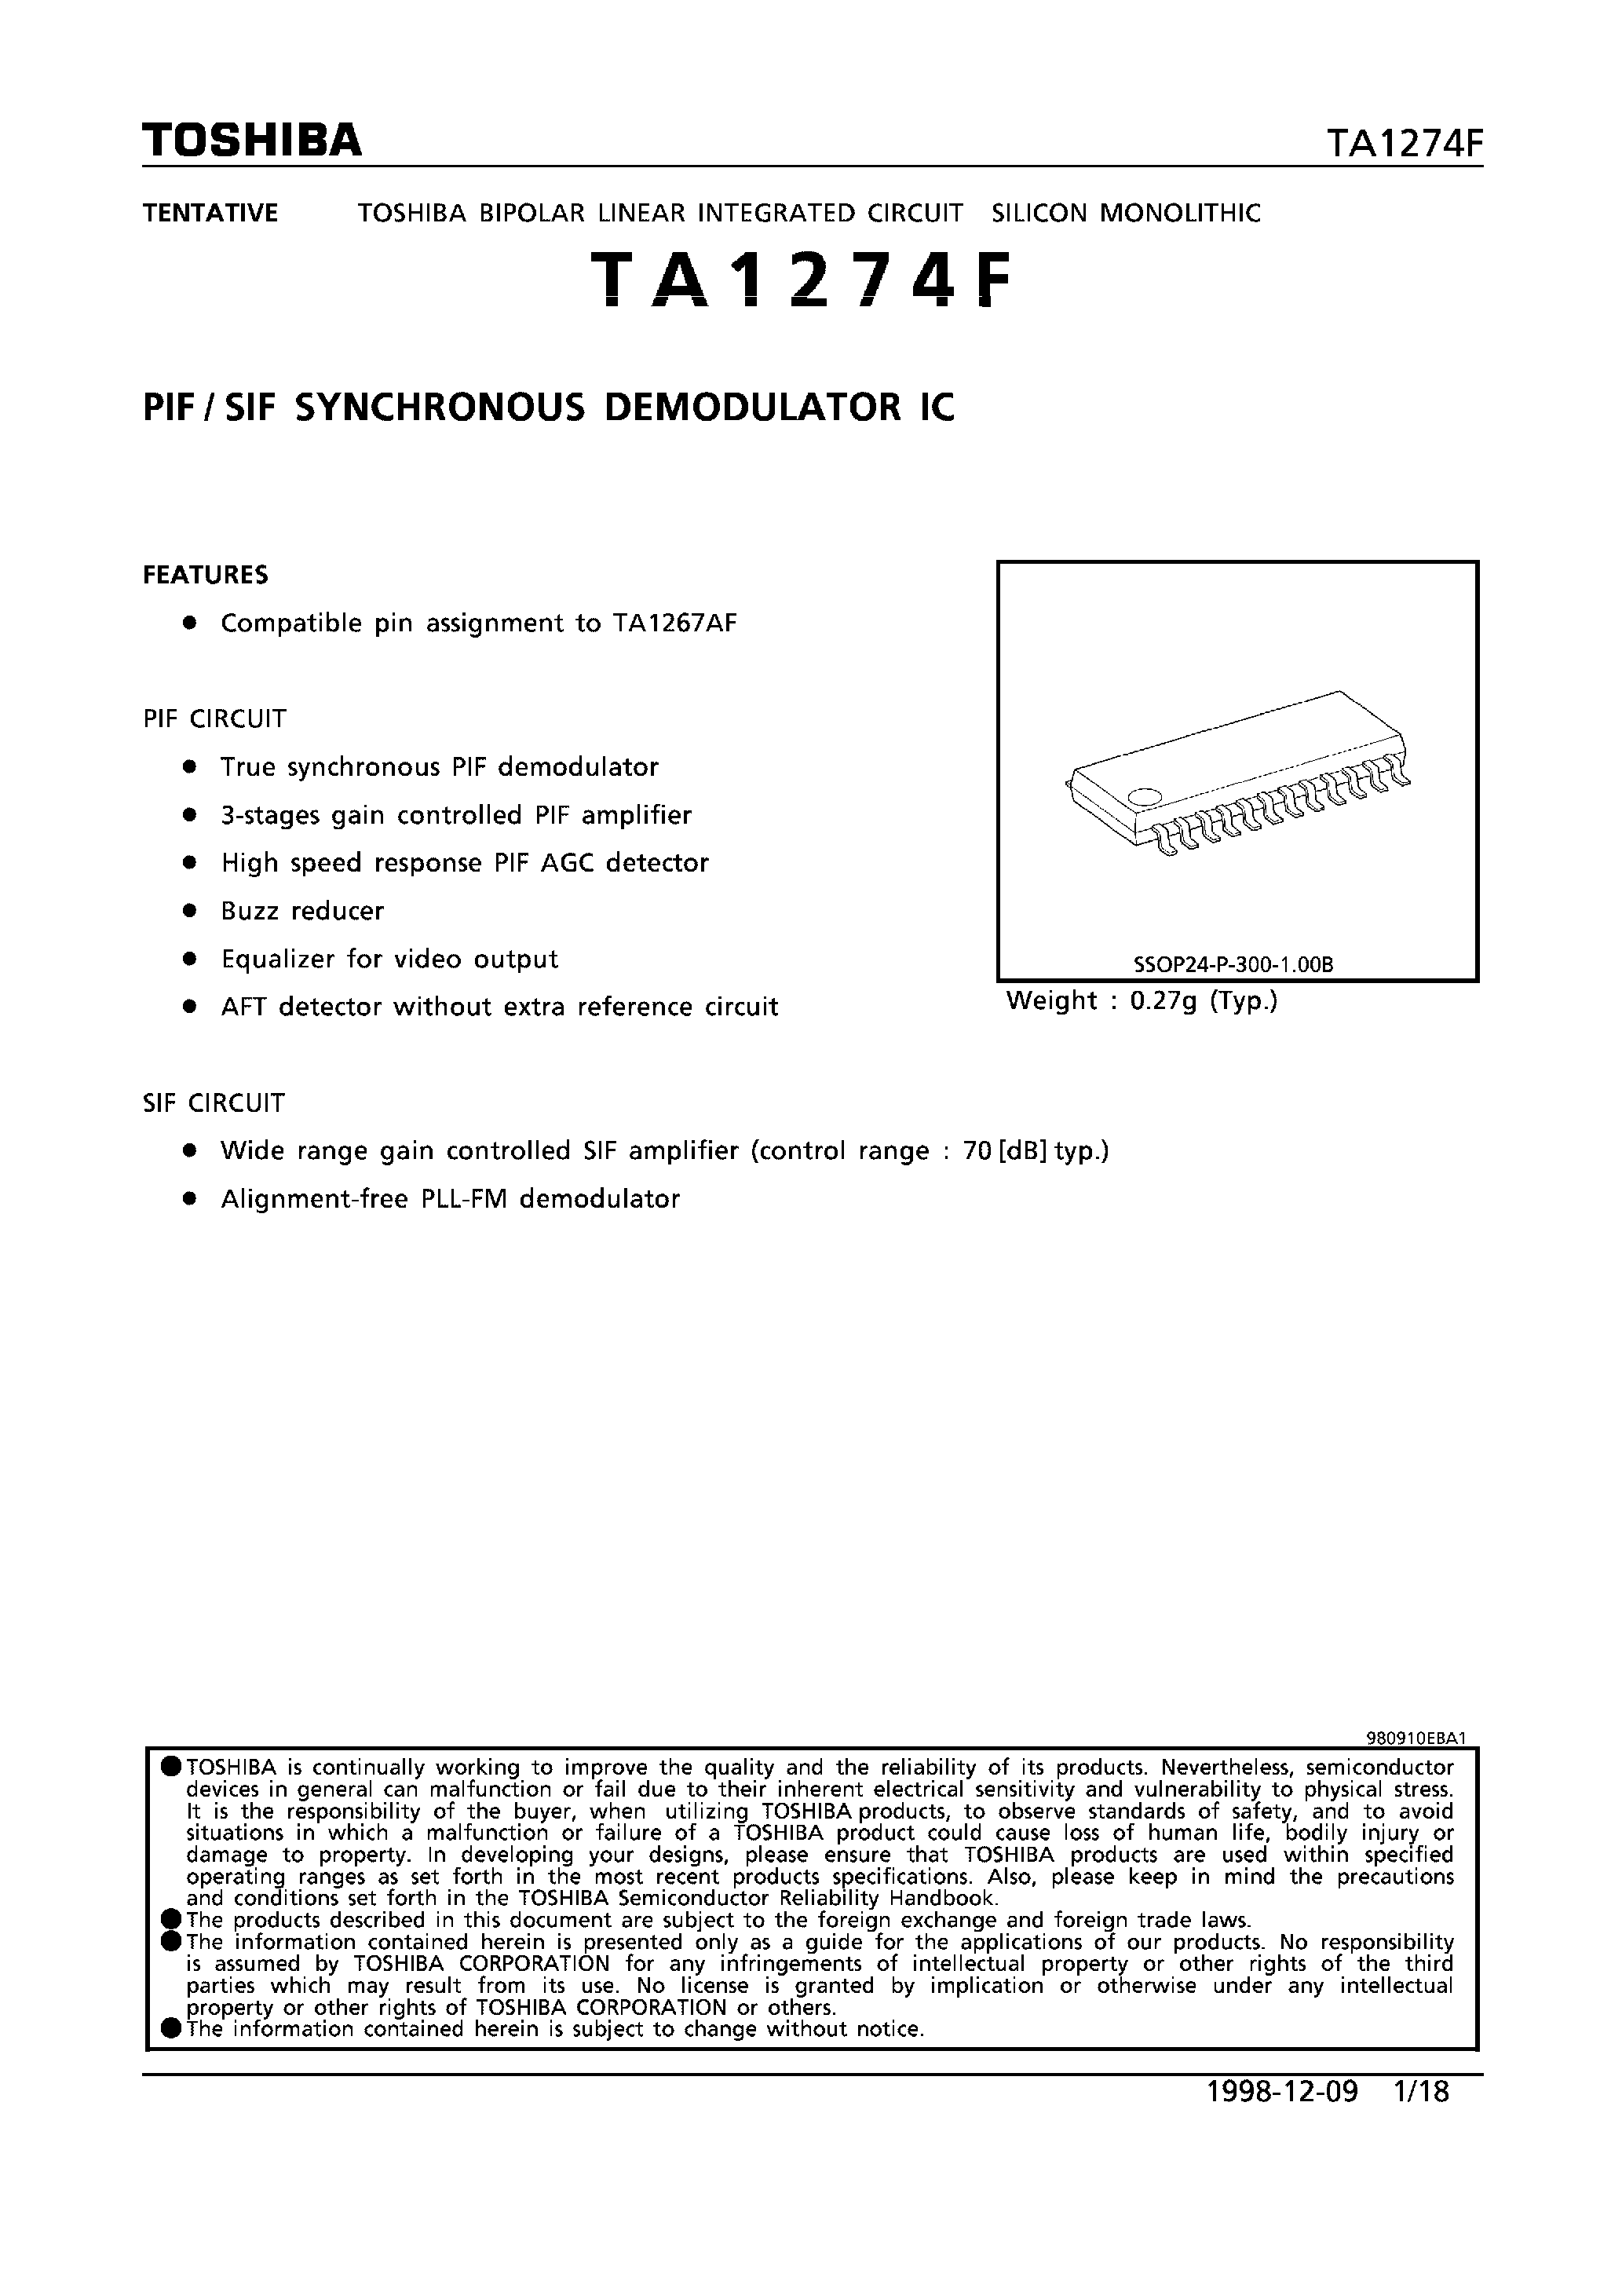 Datasheet TA1274F - PIF/SIF SYNCHRONOUS DEMODULATOR IC page 1